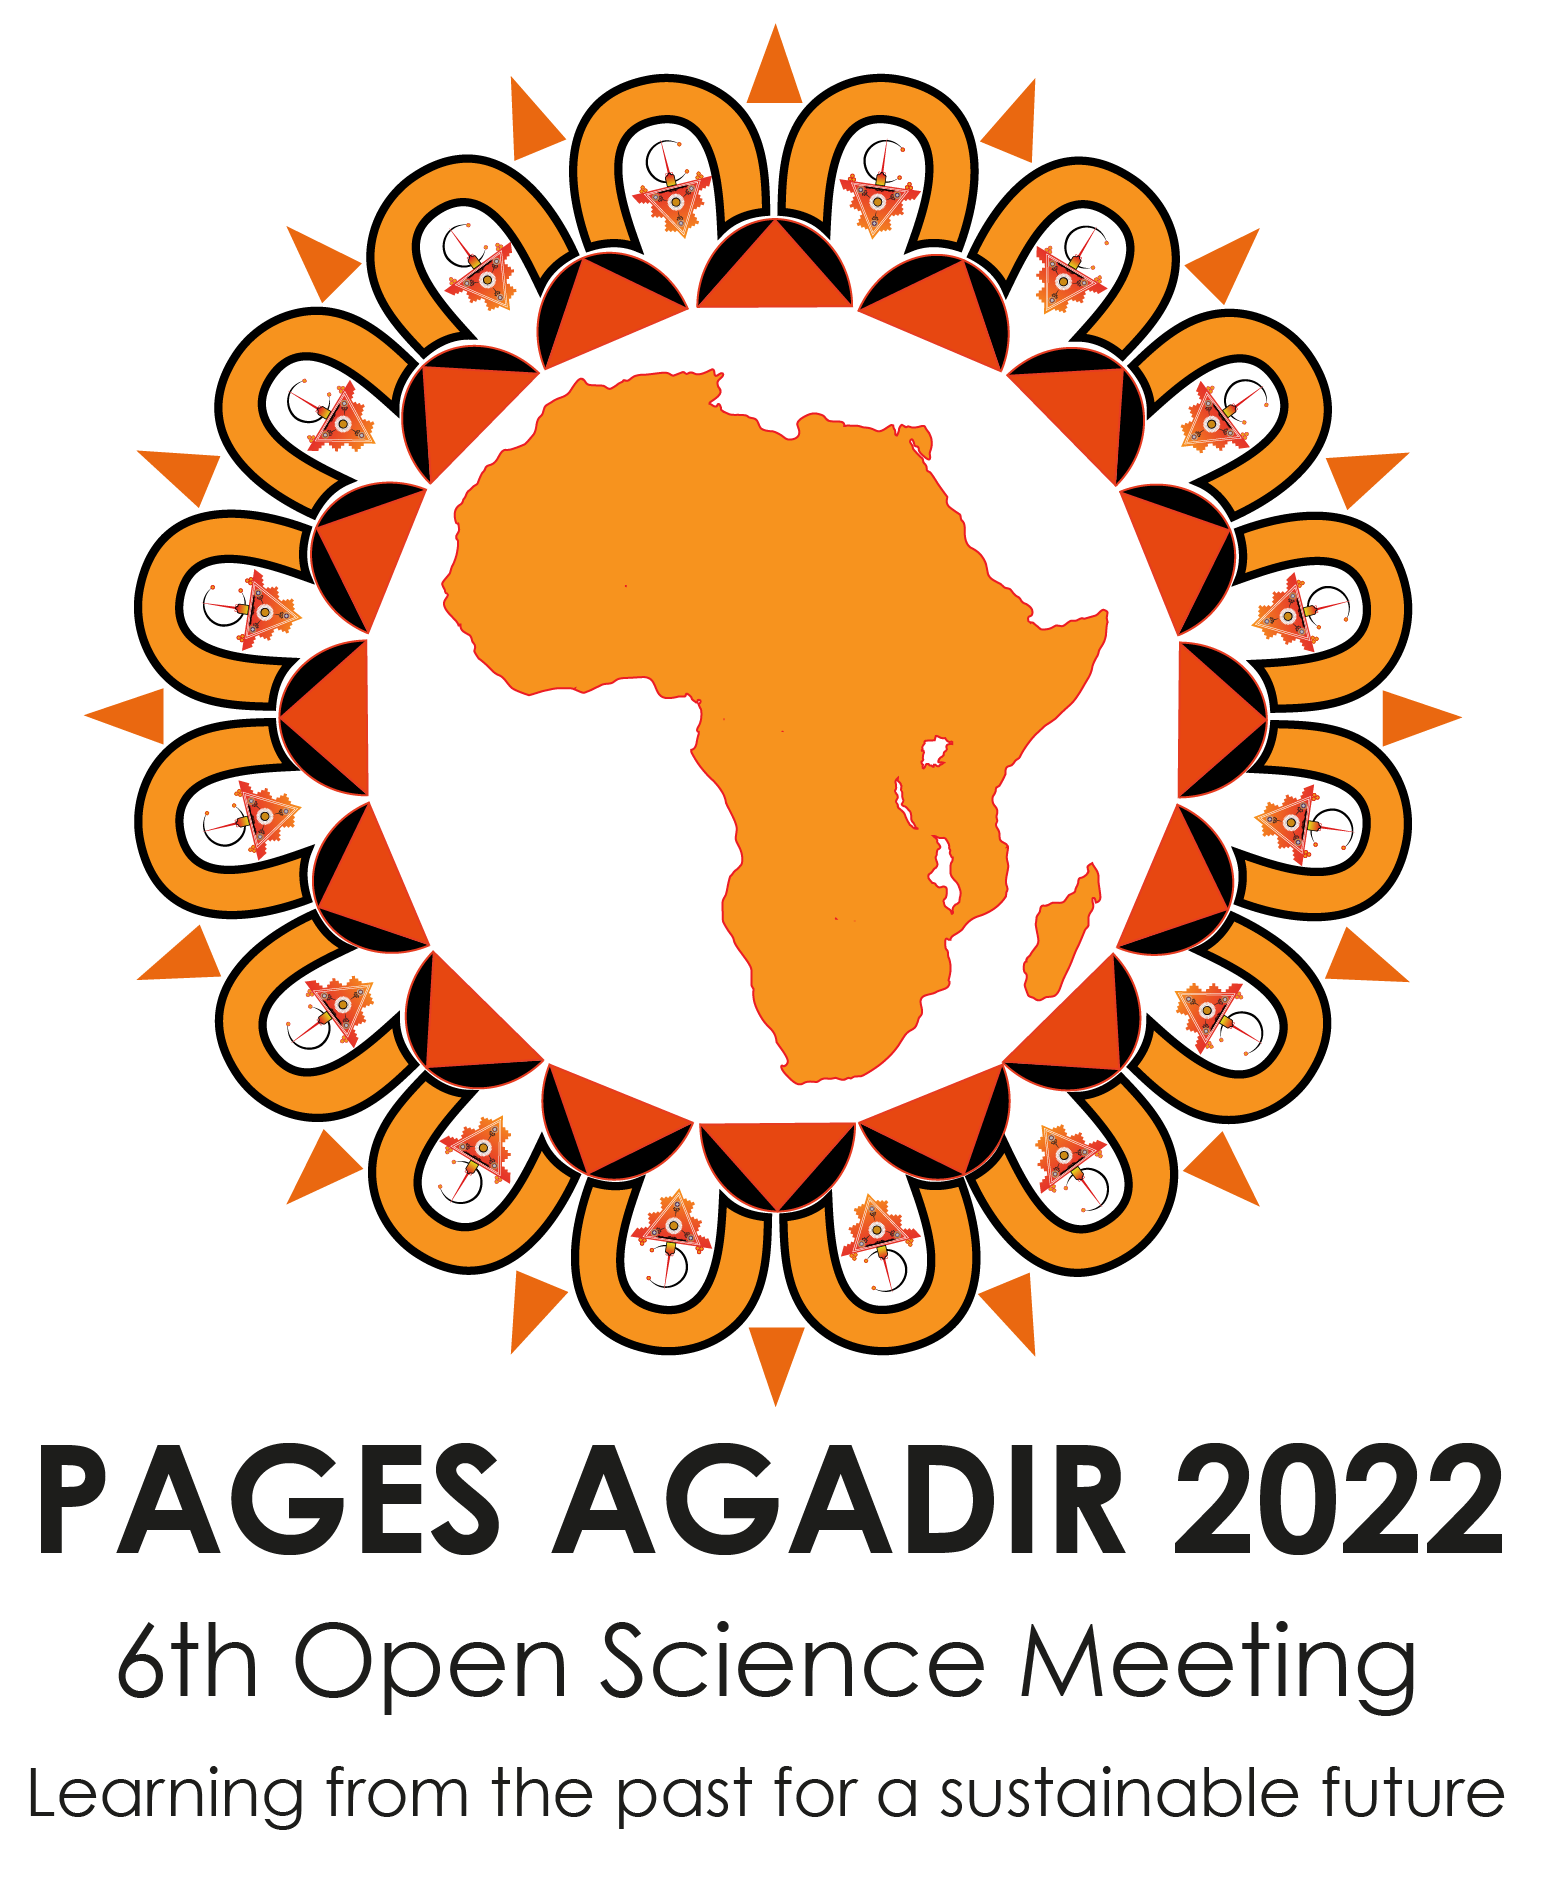 PAGES OSM Agadir 2022 logo